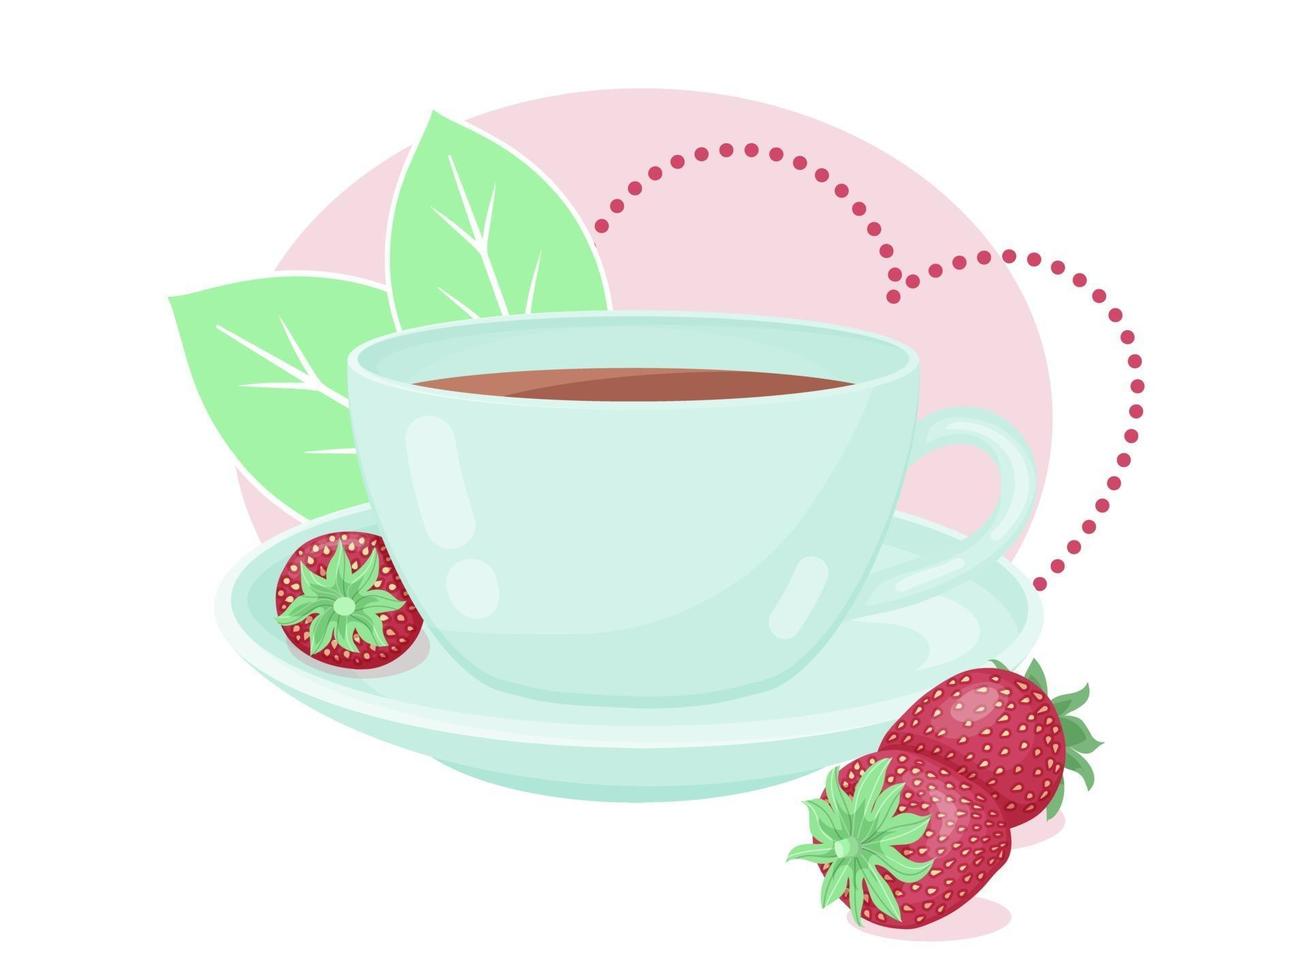 Teetasse mit frischer Erdbeere vektor